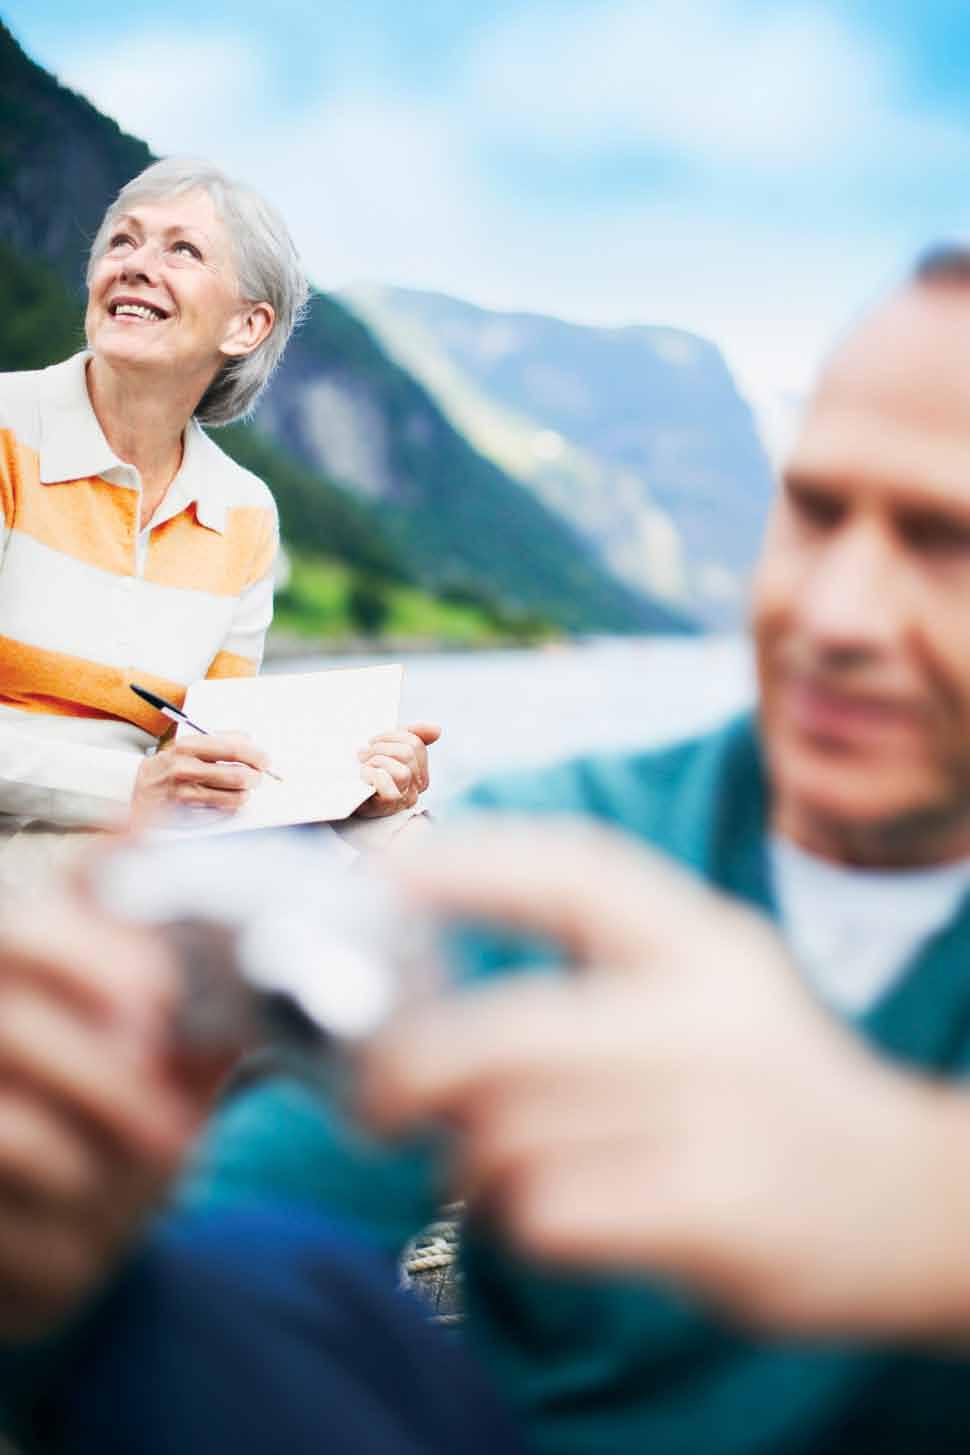 five key financial risks facing retirees